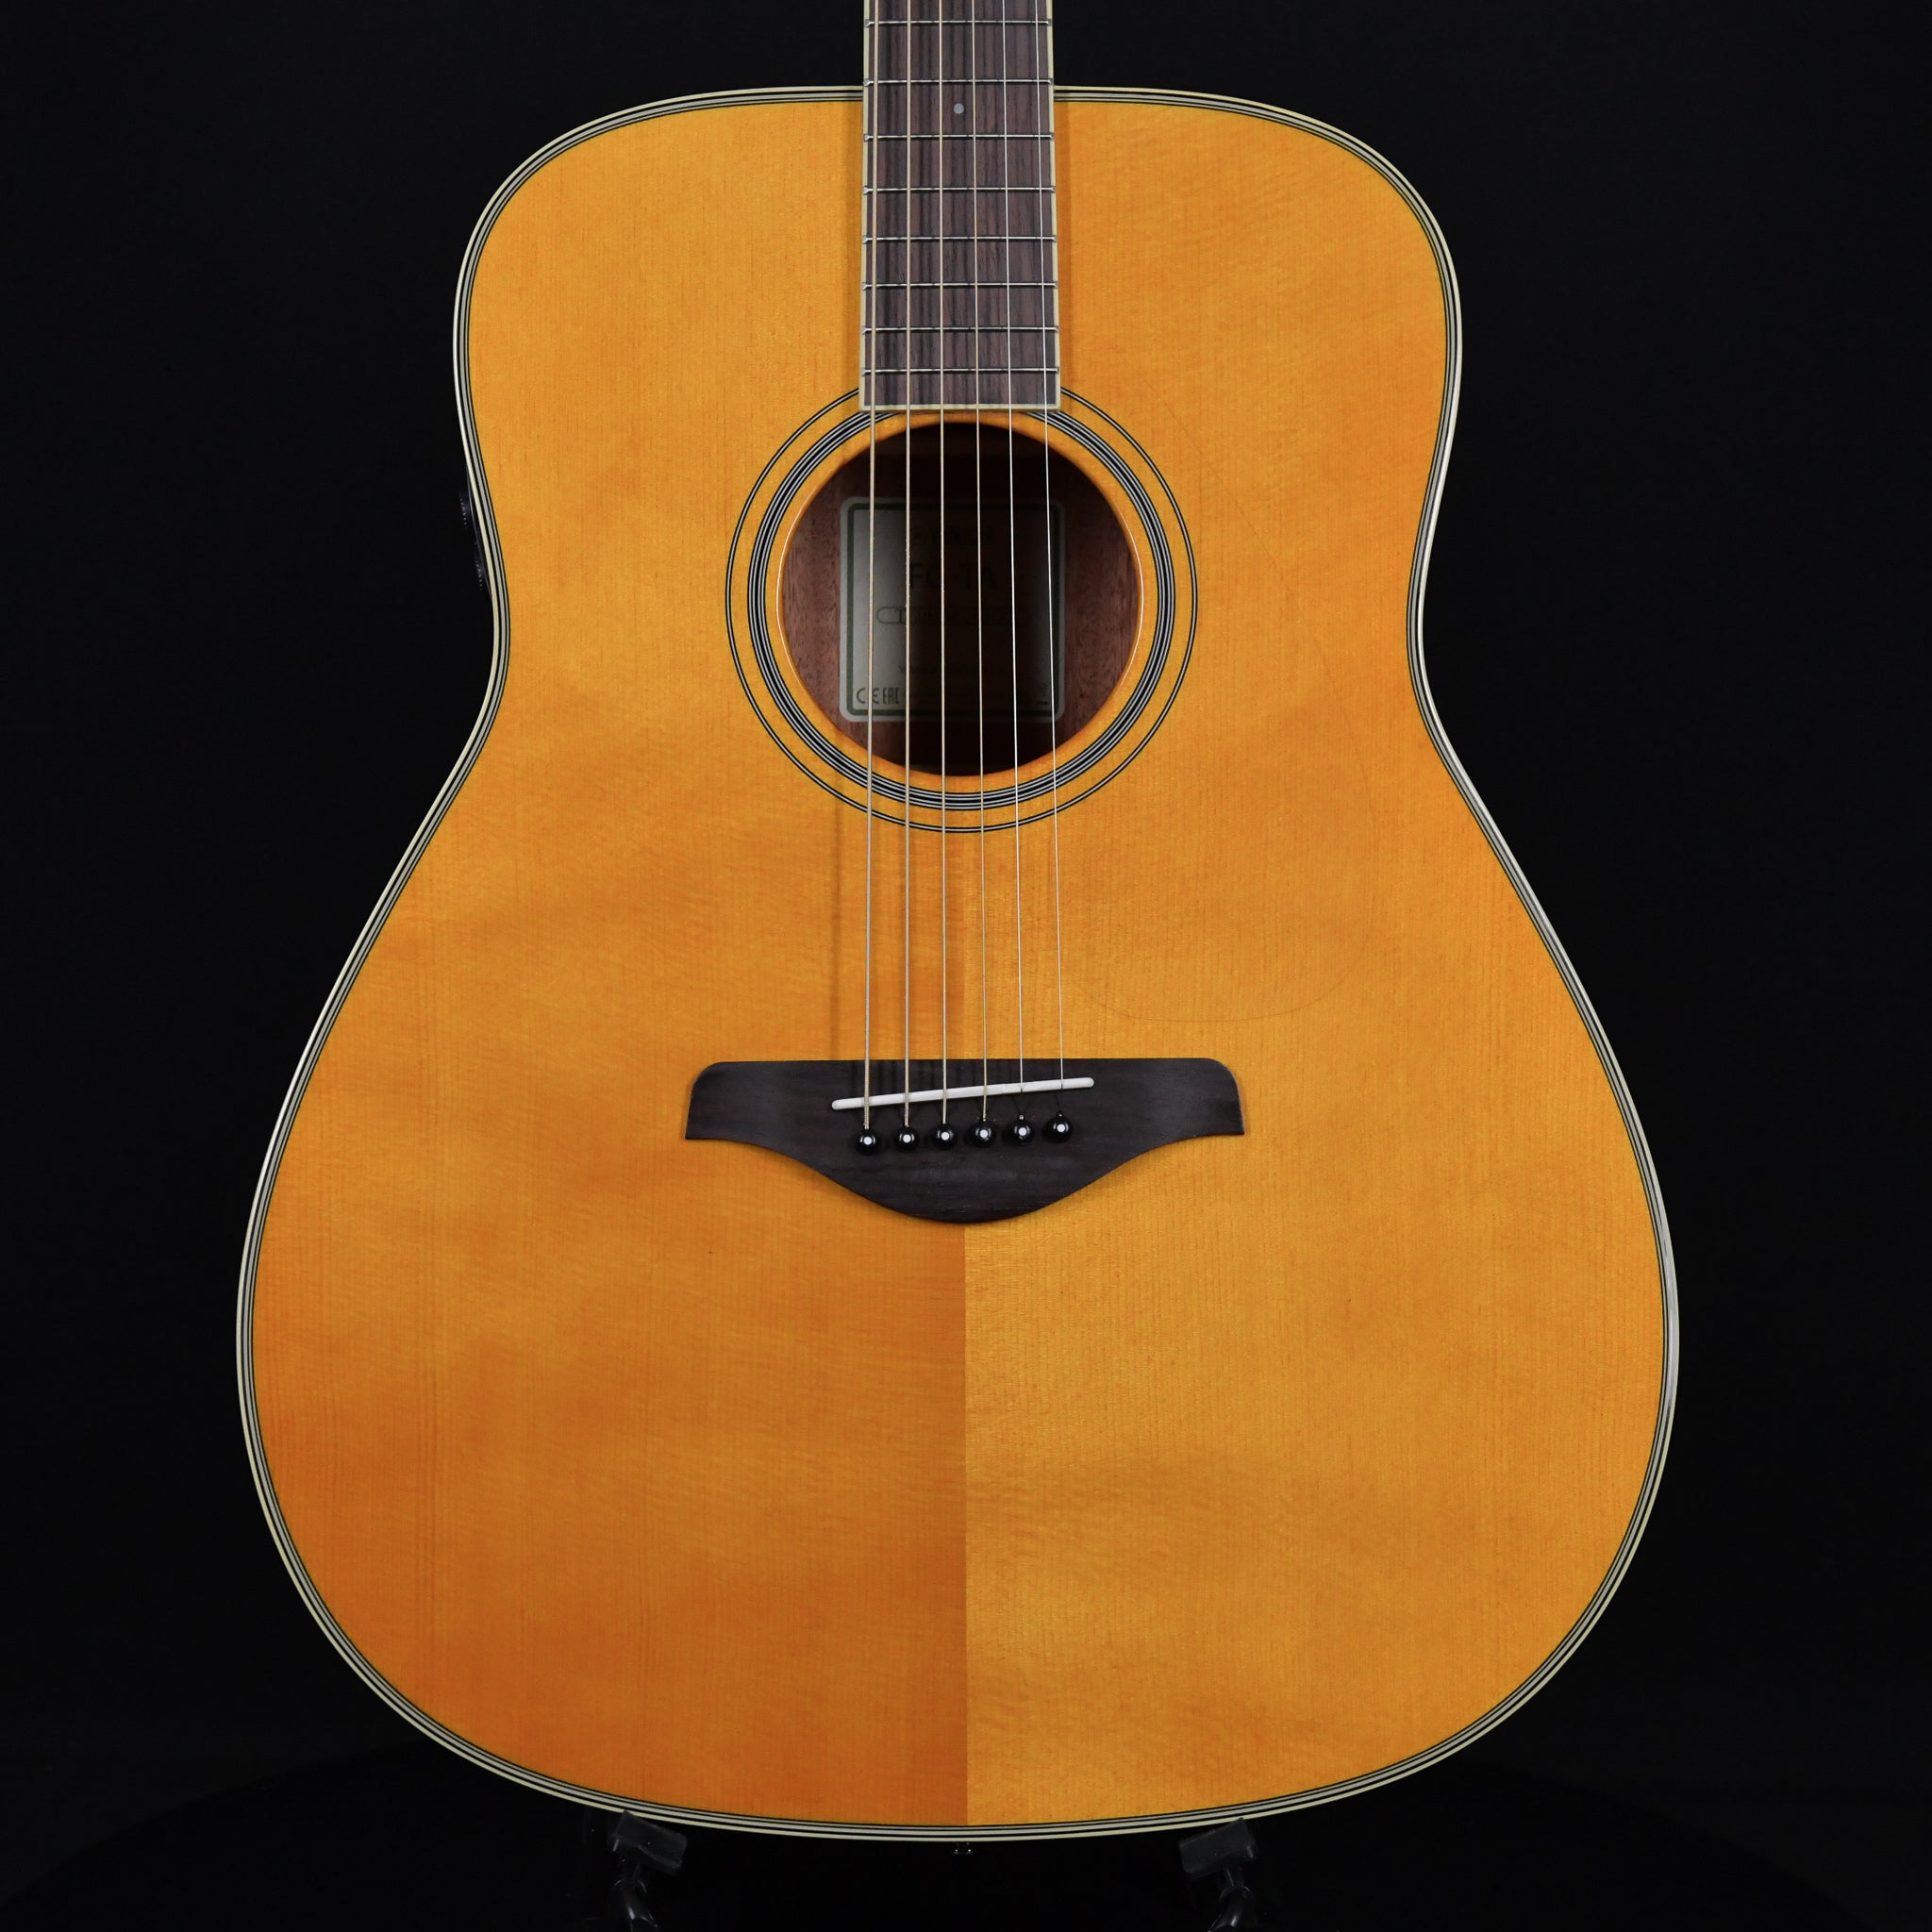 YAMAHA GC45II - Guitare classique C45 - Exclusivité Cultura